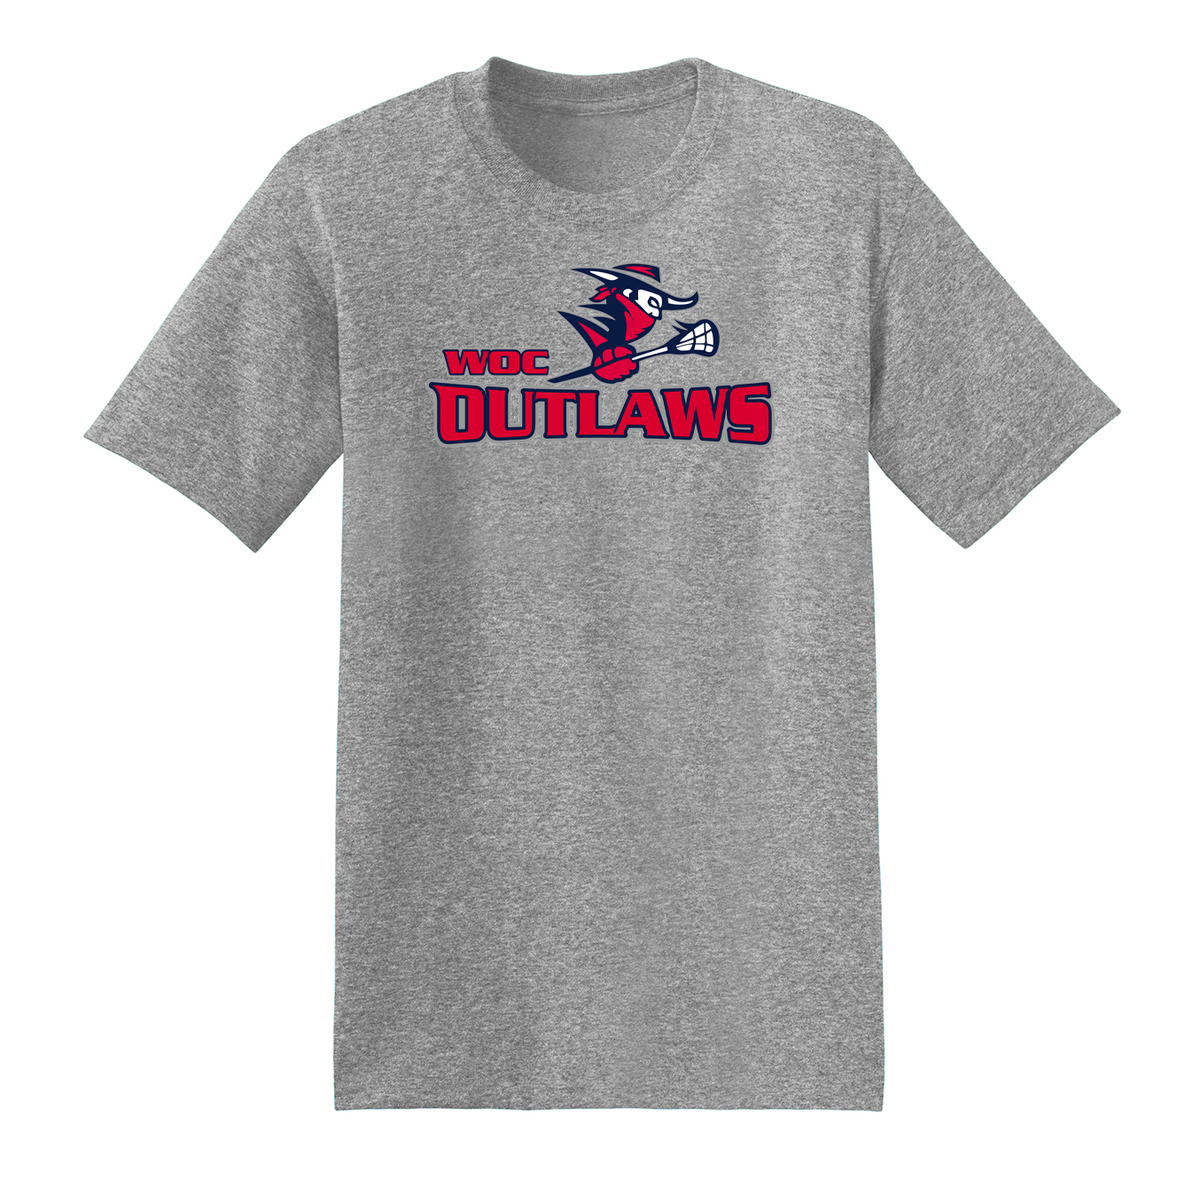 WOC Outlaws Lacrosse Club T-Shirt